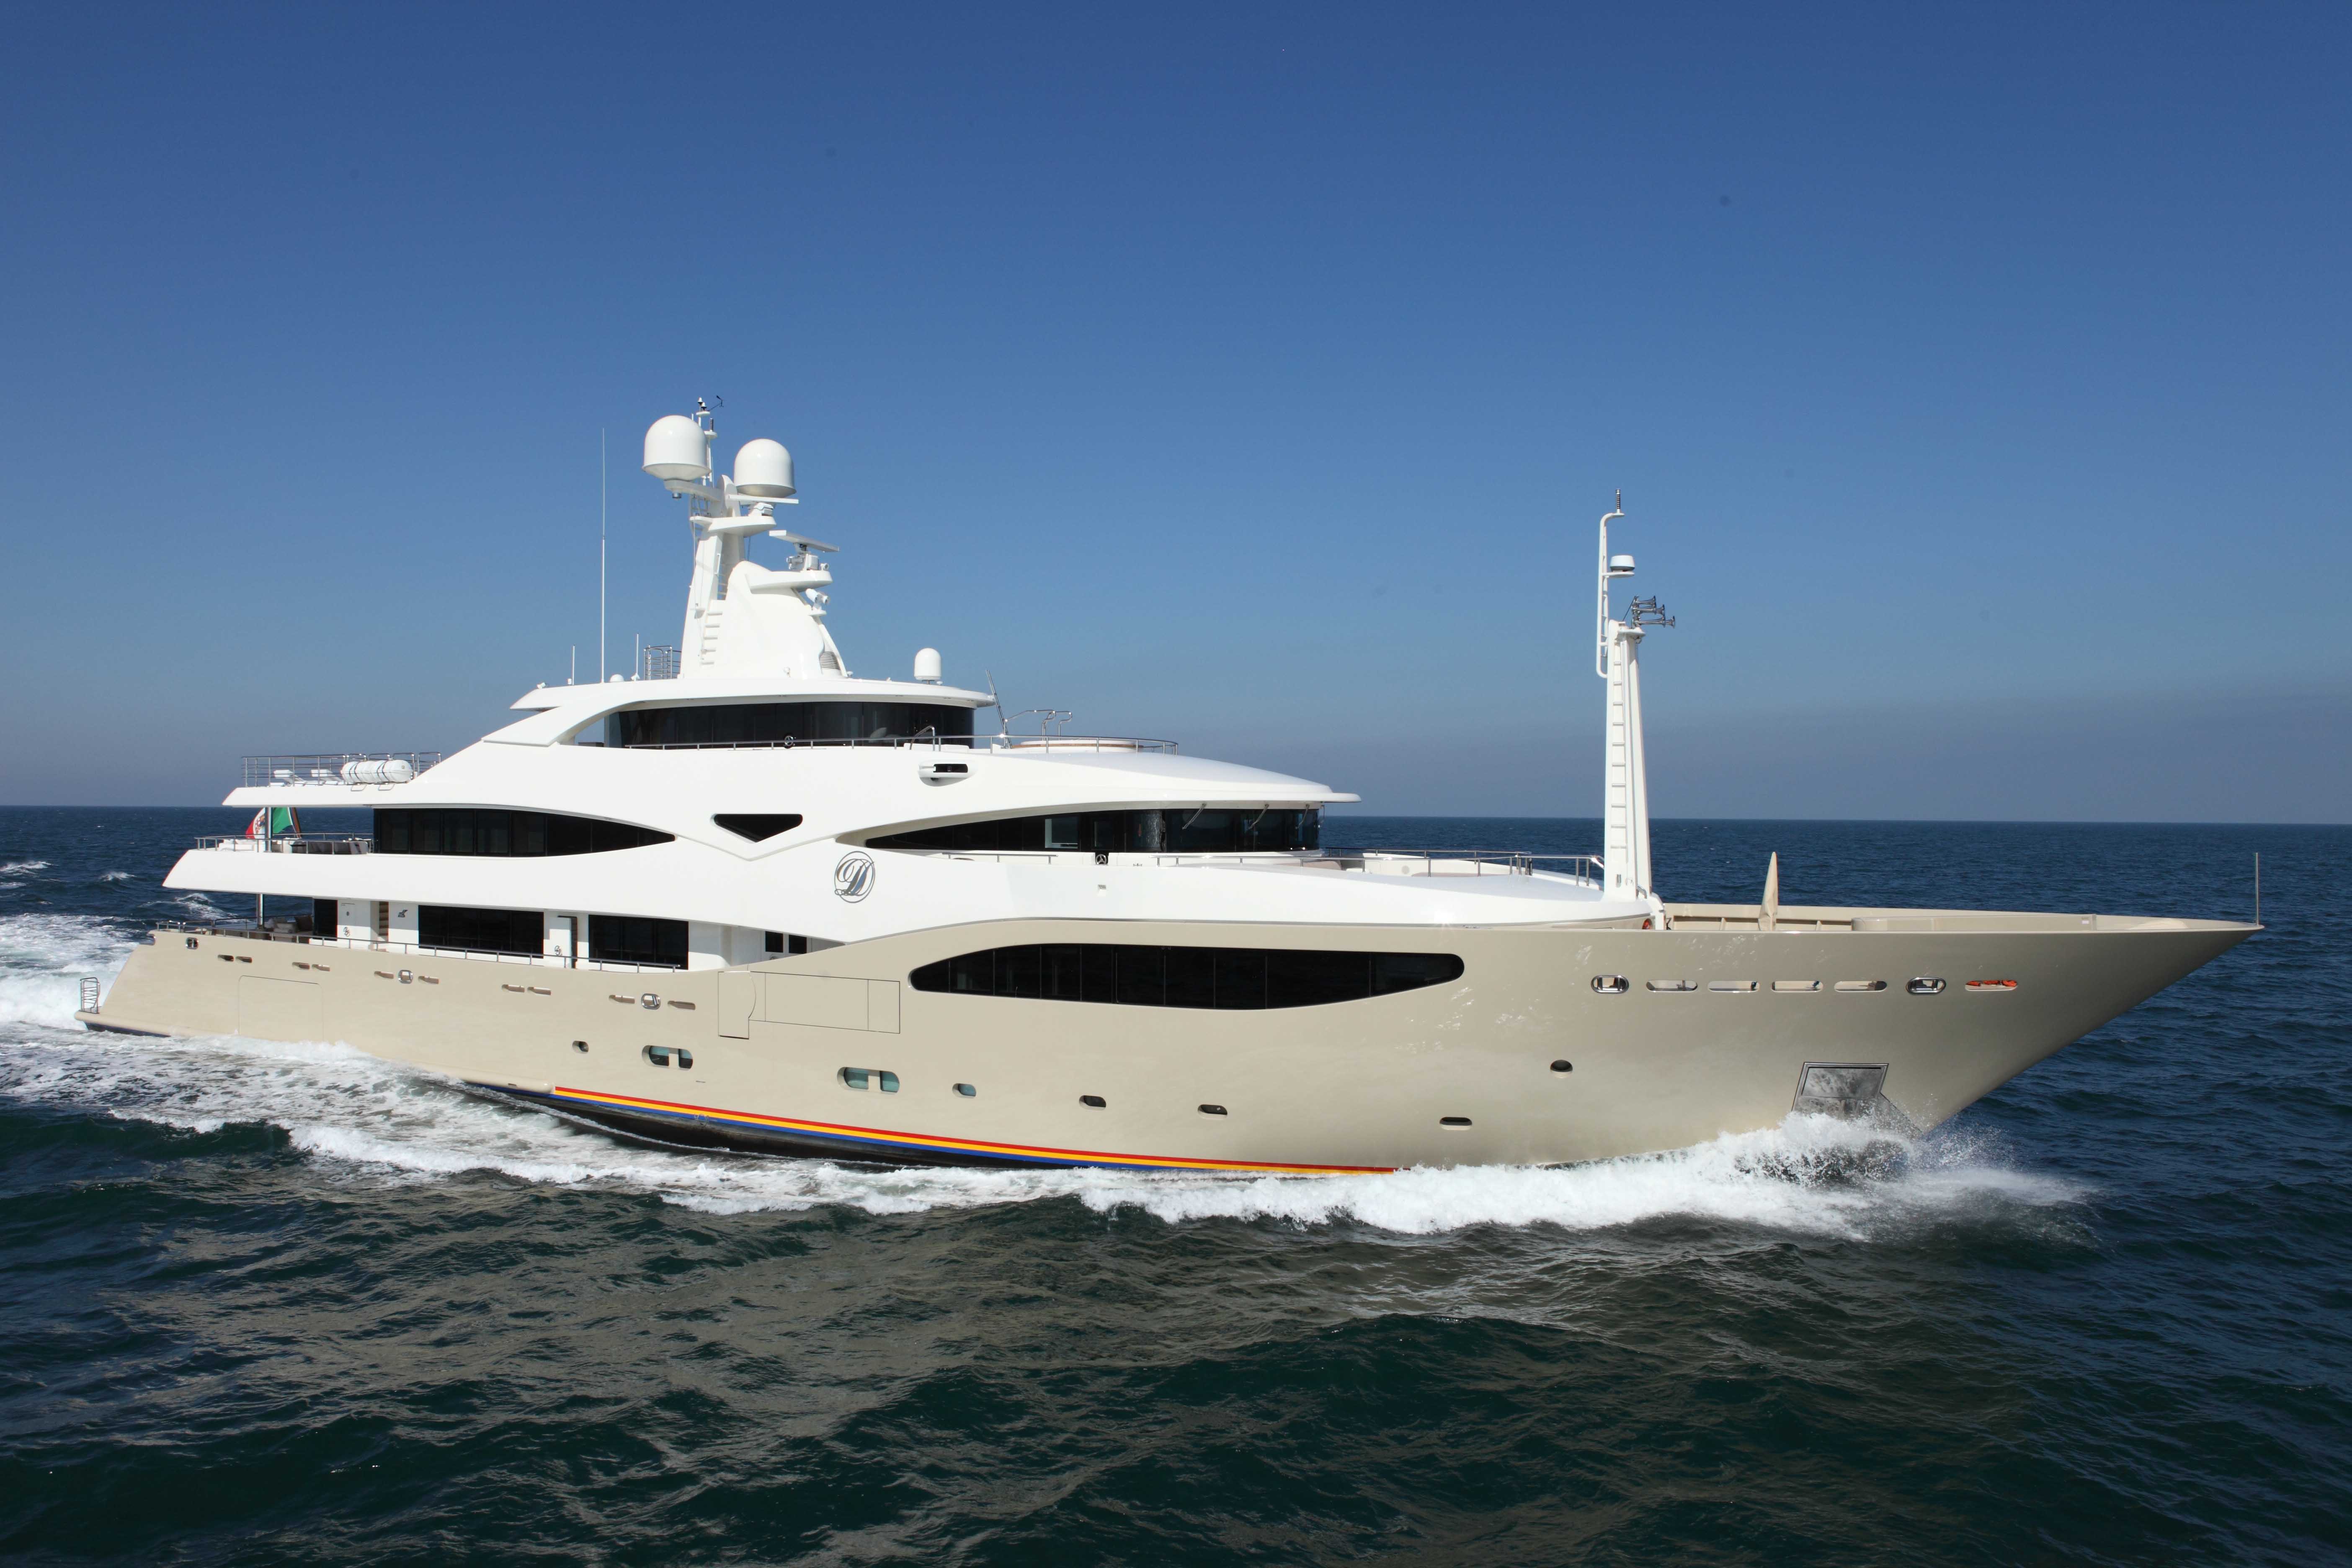 Crn 130 Motor Yacht Darlings Danama Premiers At The Monaco Yacht Show 12 Yacht Charter Superyacht News